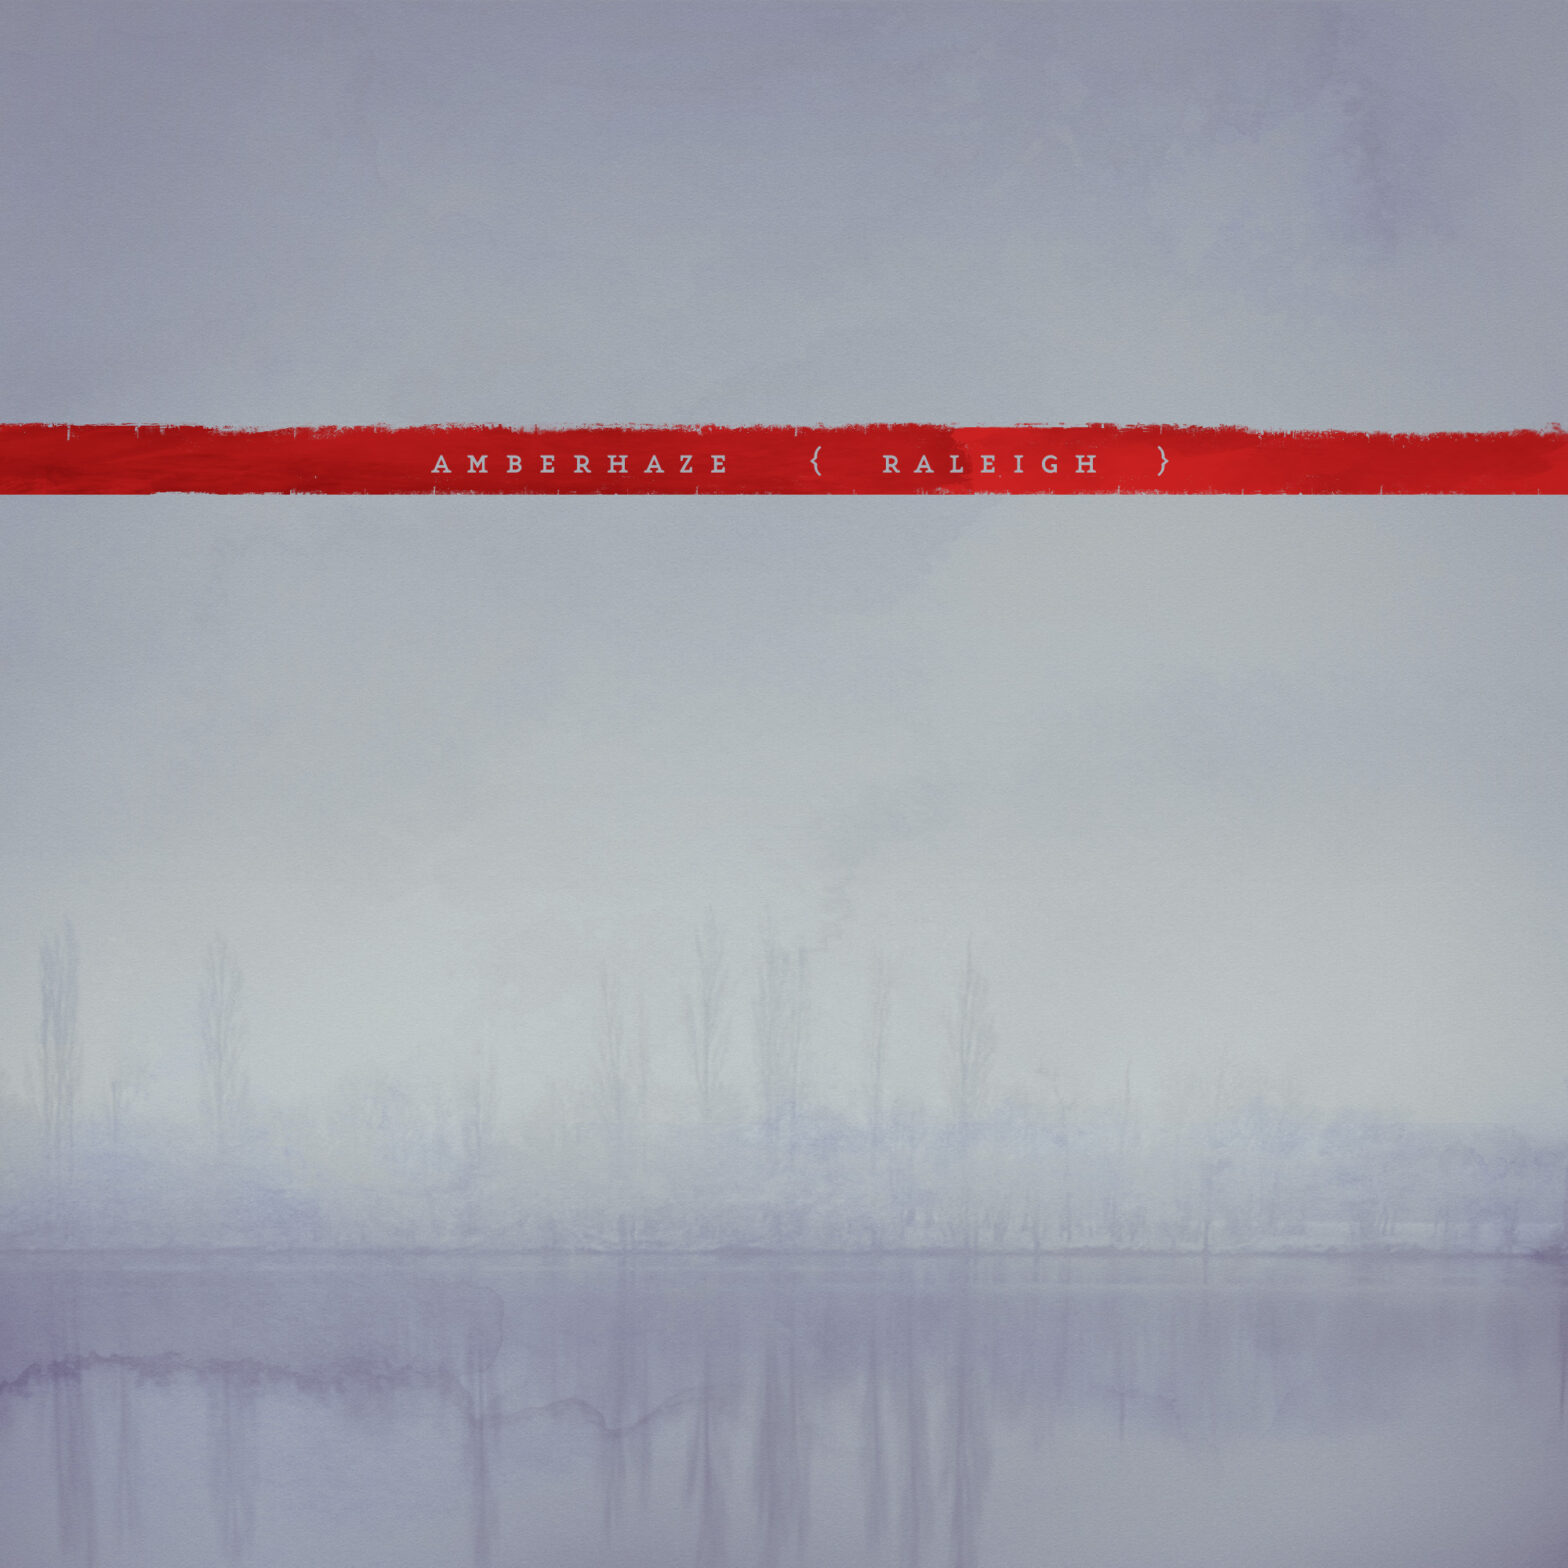 Amberhaze – Raleigh EP – 11.1.11